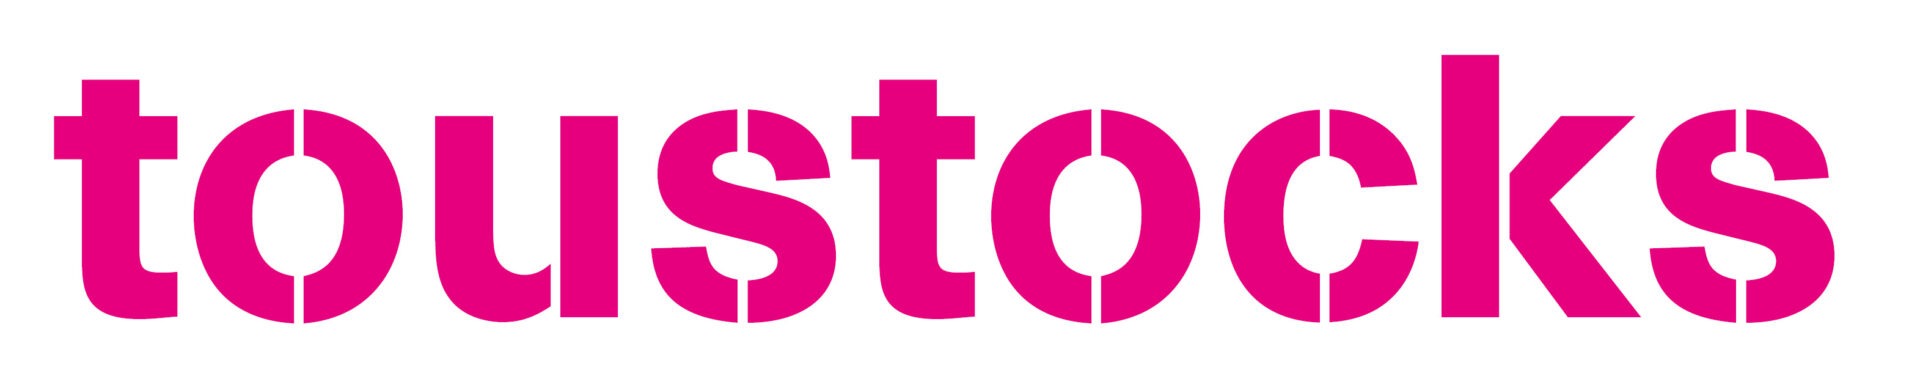 Logo Toustocks magasin déstockage